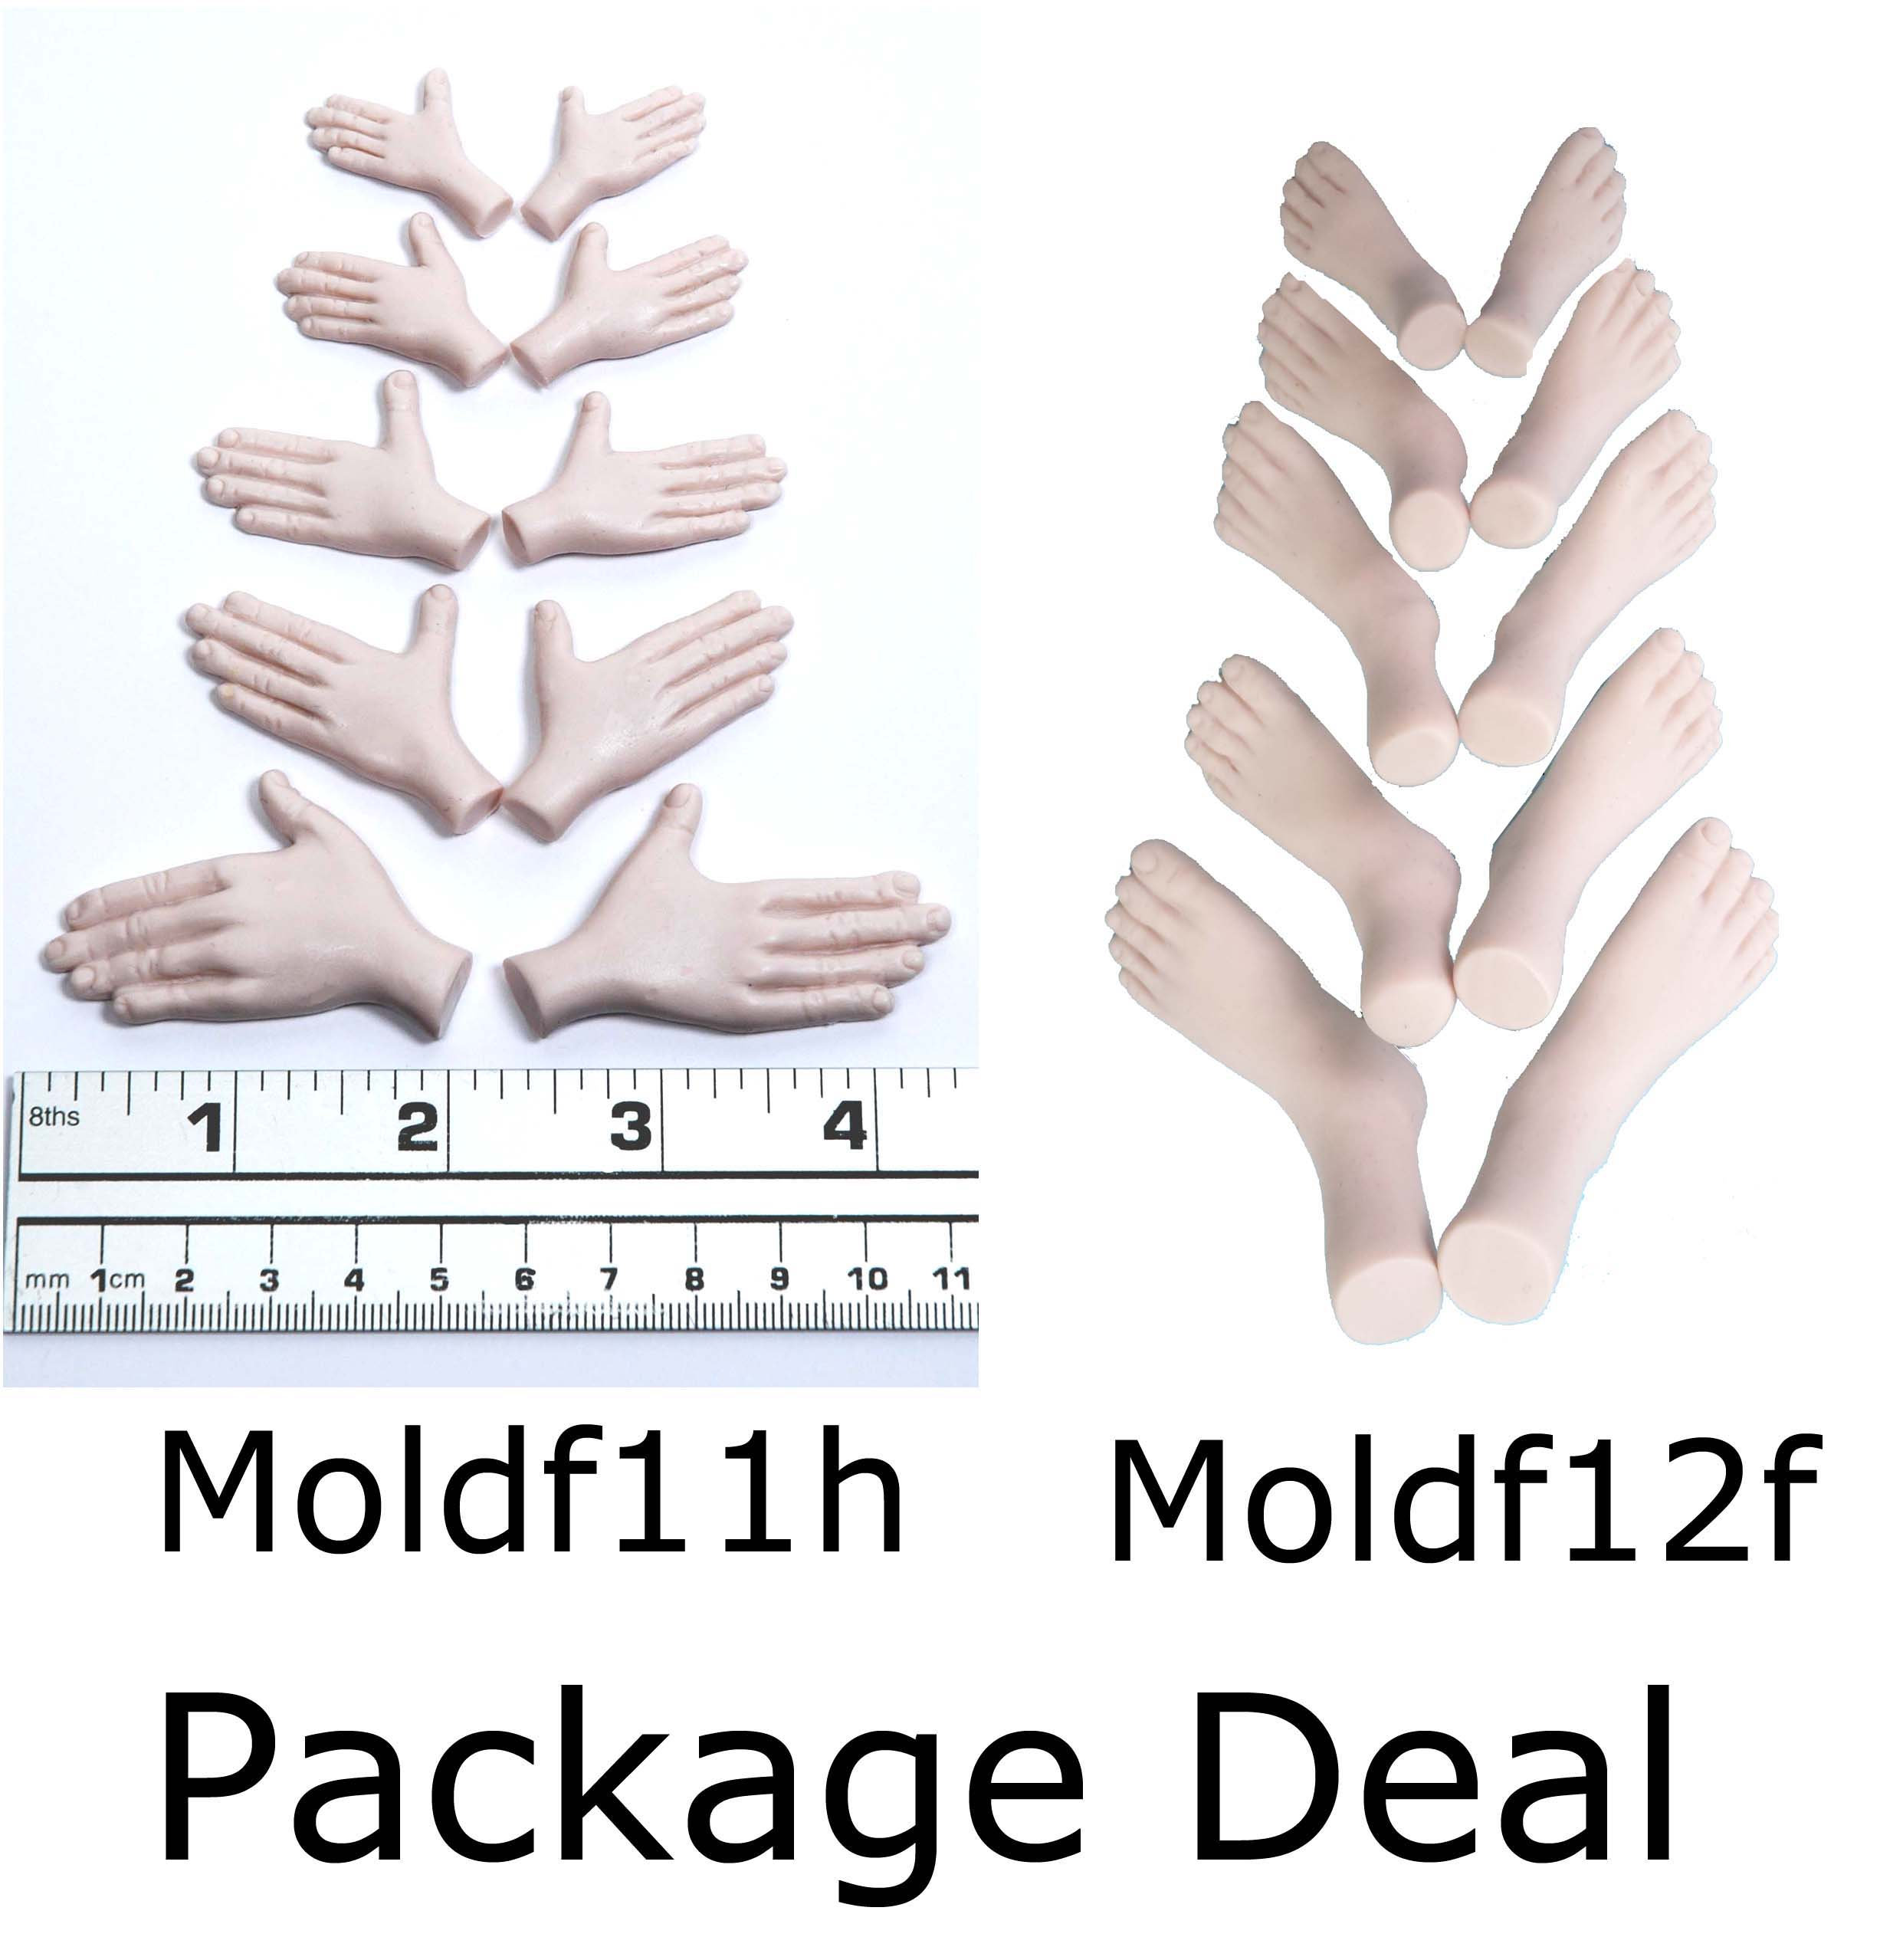 Moldf11h,moldf12f Package Deal, Hand Mold, Feet Mold by Maureen Carlson. 